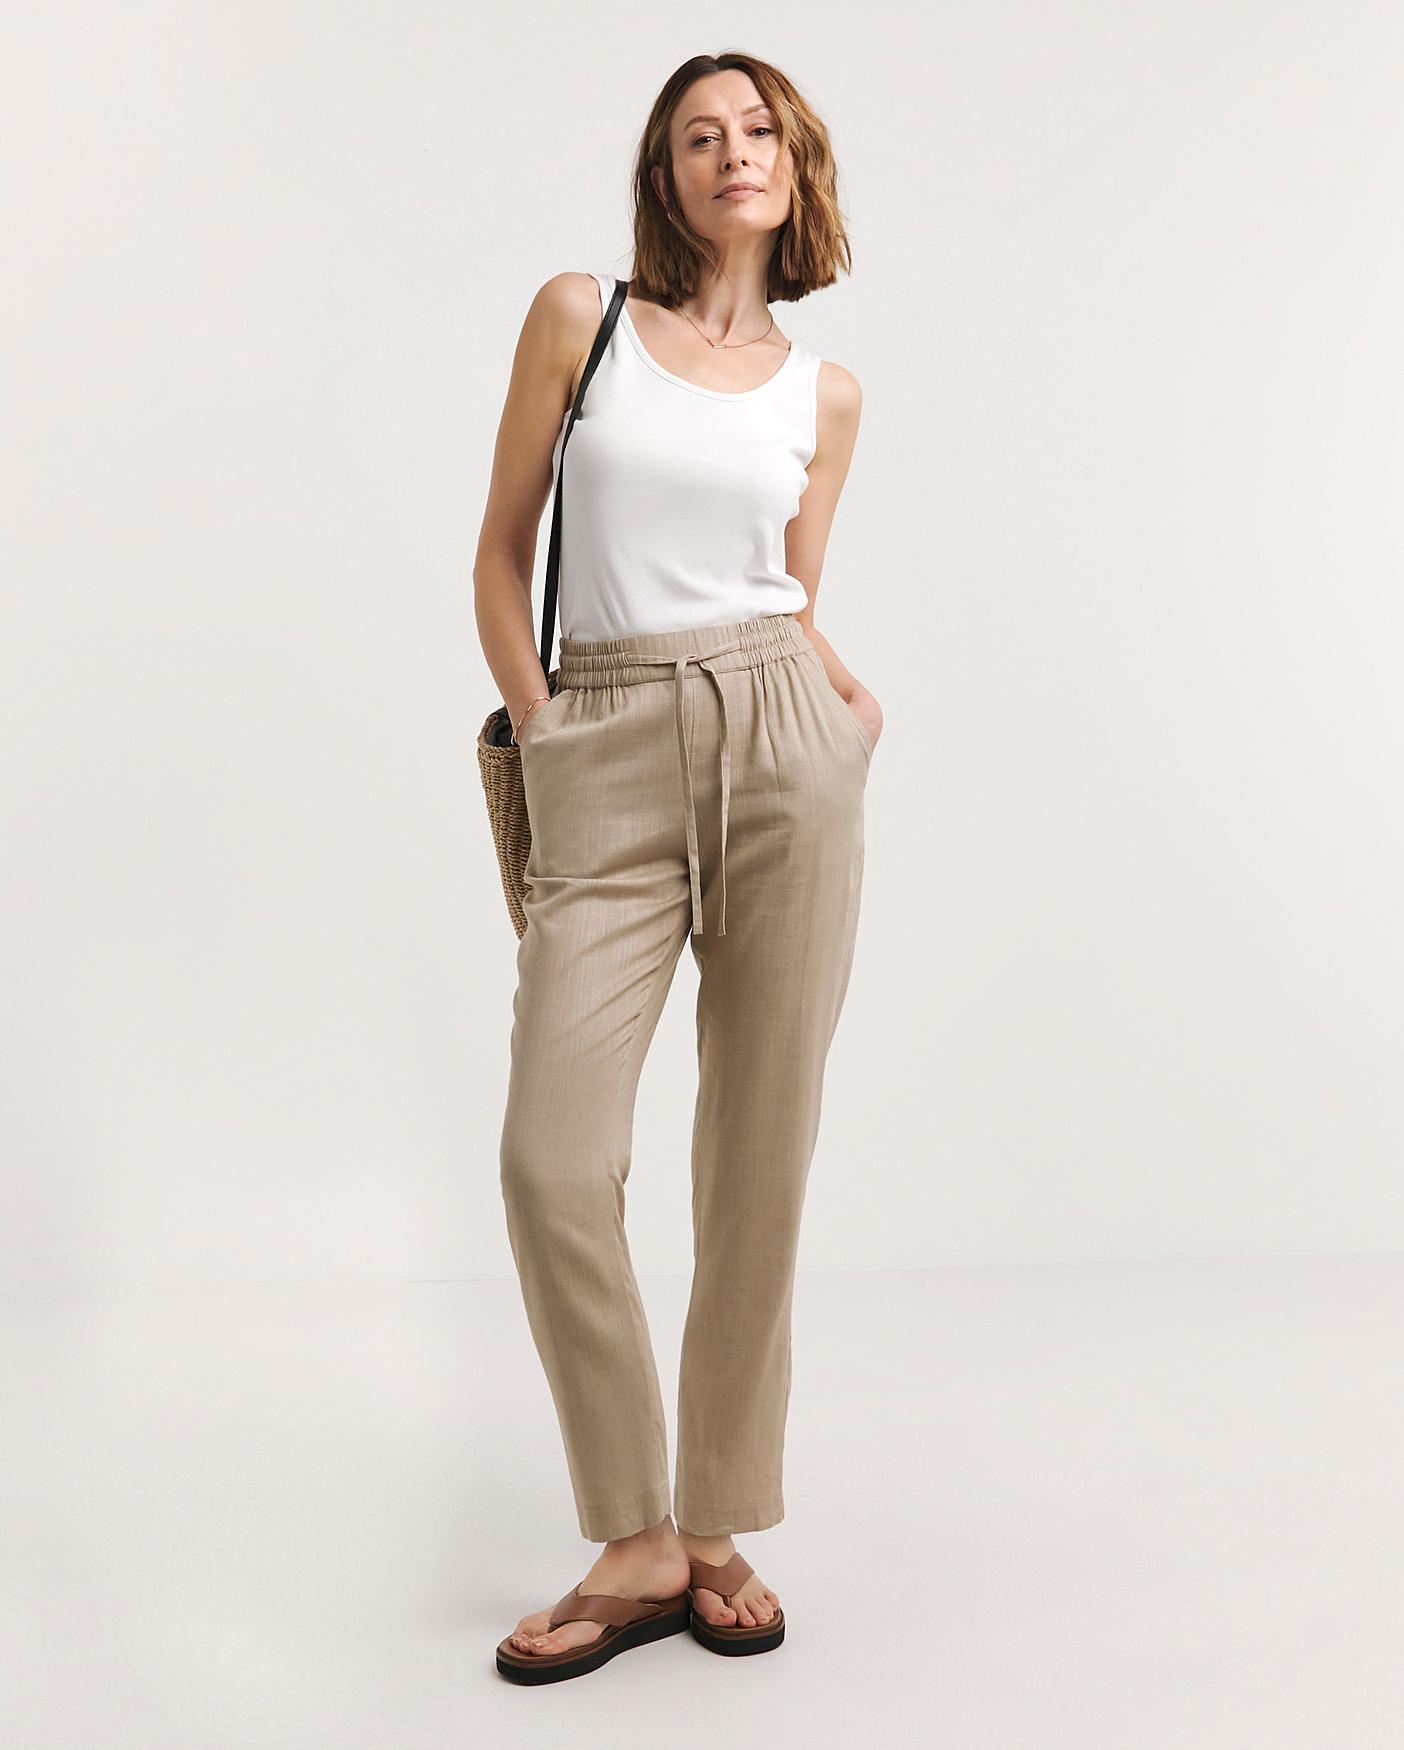 Linen Clothing for Women | Linen Trousers, Shirts & Tops | Bonmarché